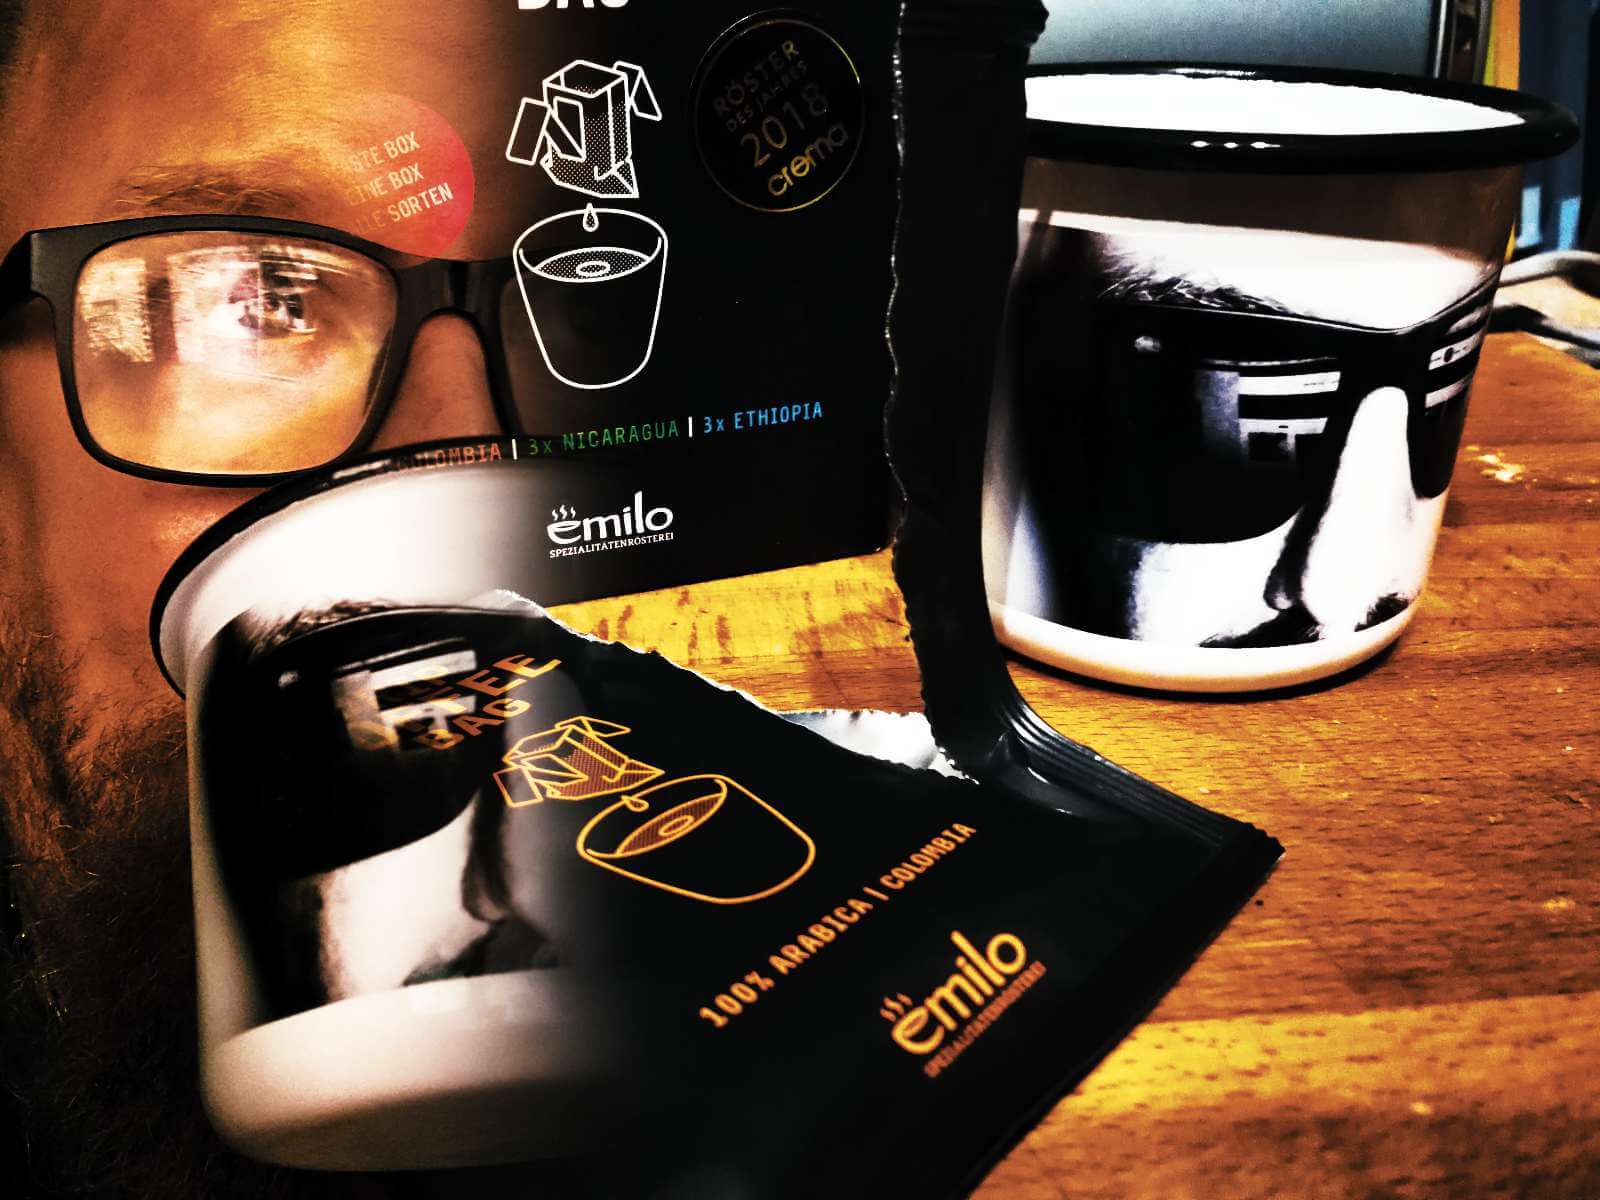 Emilo Drip Coffee Bag - Test Review